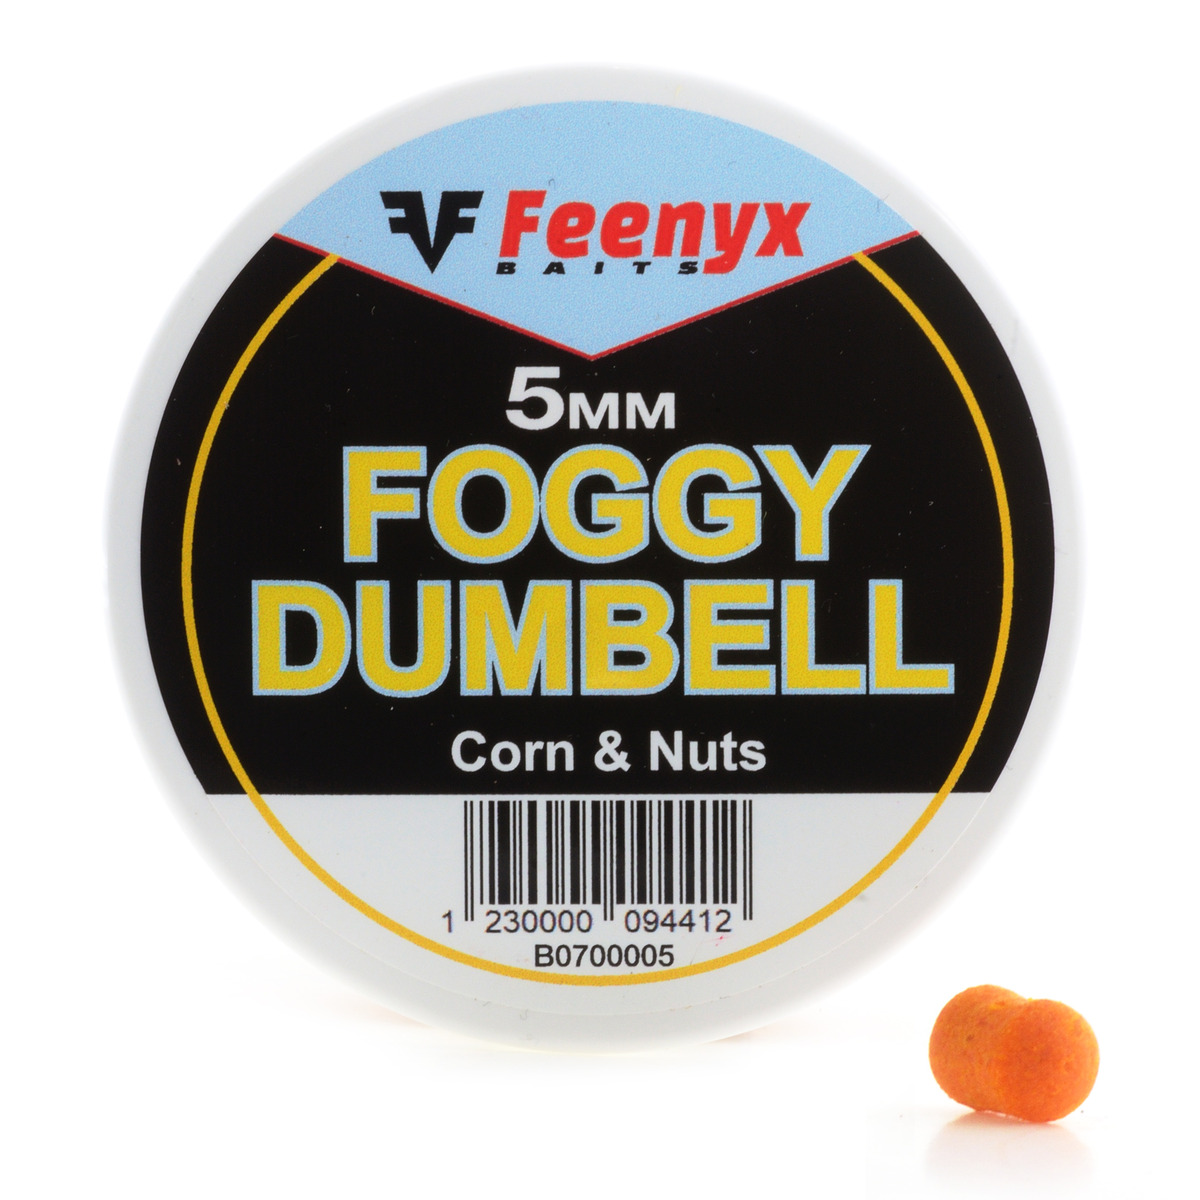 Feenyx Foggy Dumbell Corn & Nuts - 5 mm